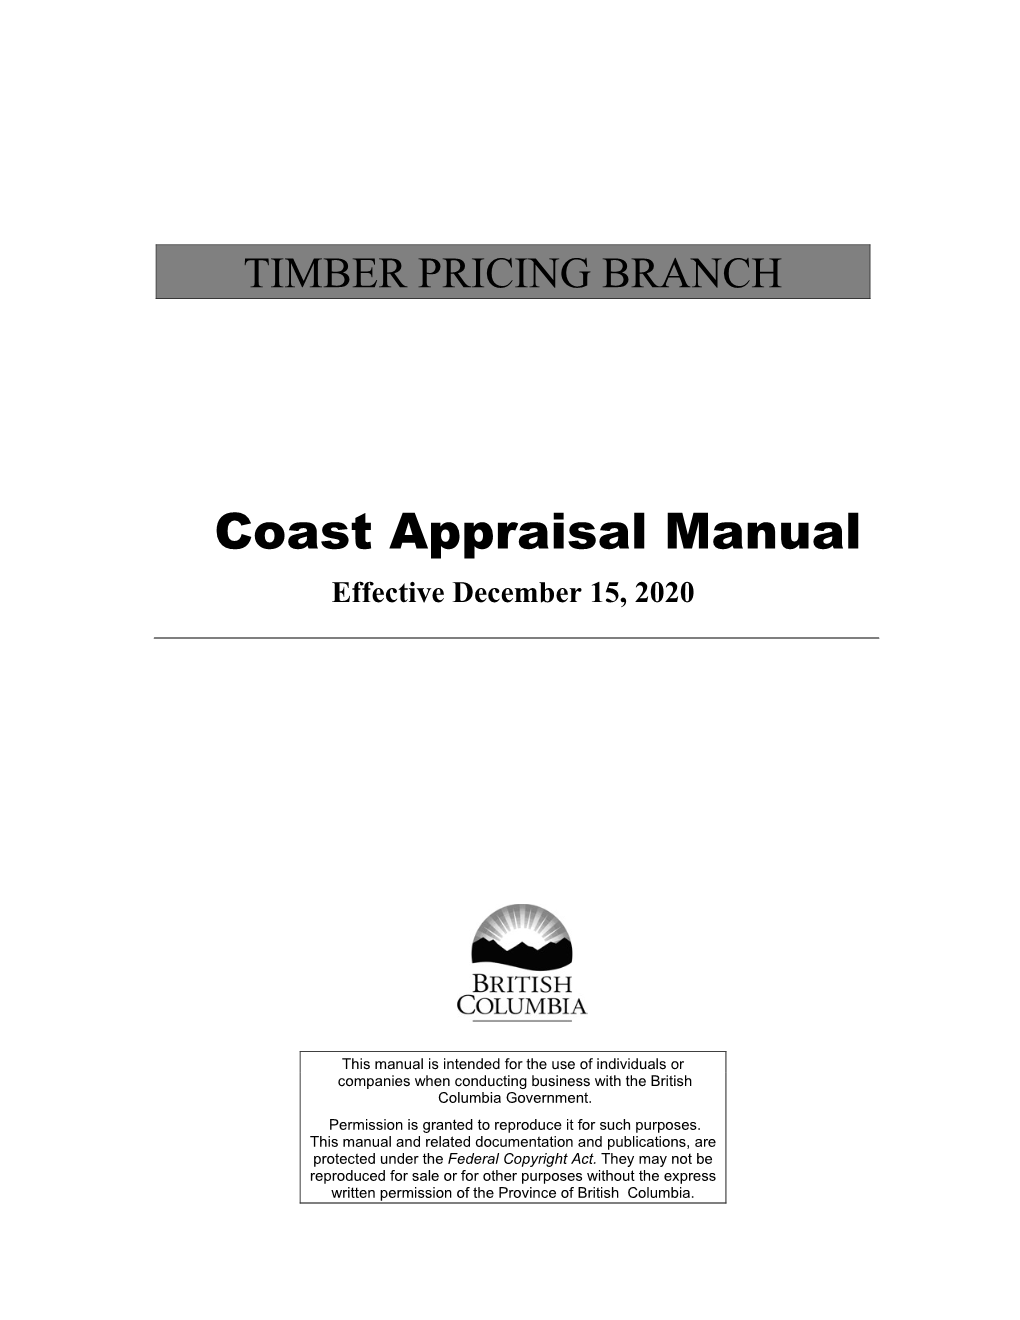 Coast Appraisal Manual Effective December 15, 2020